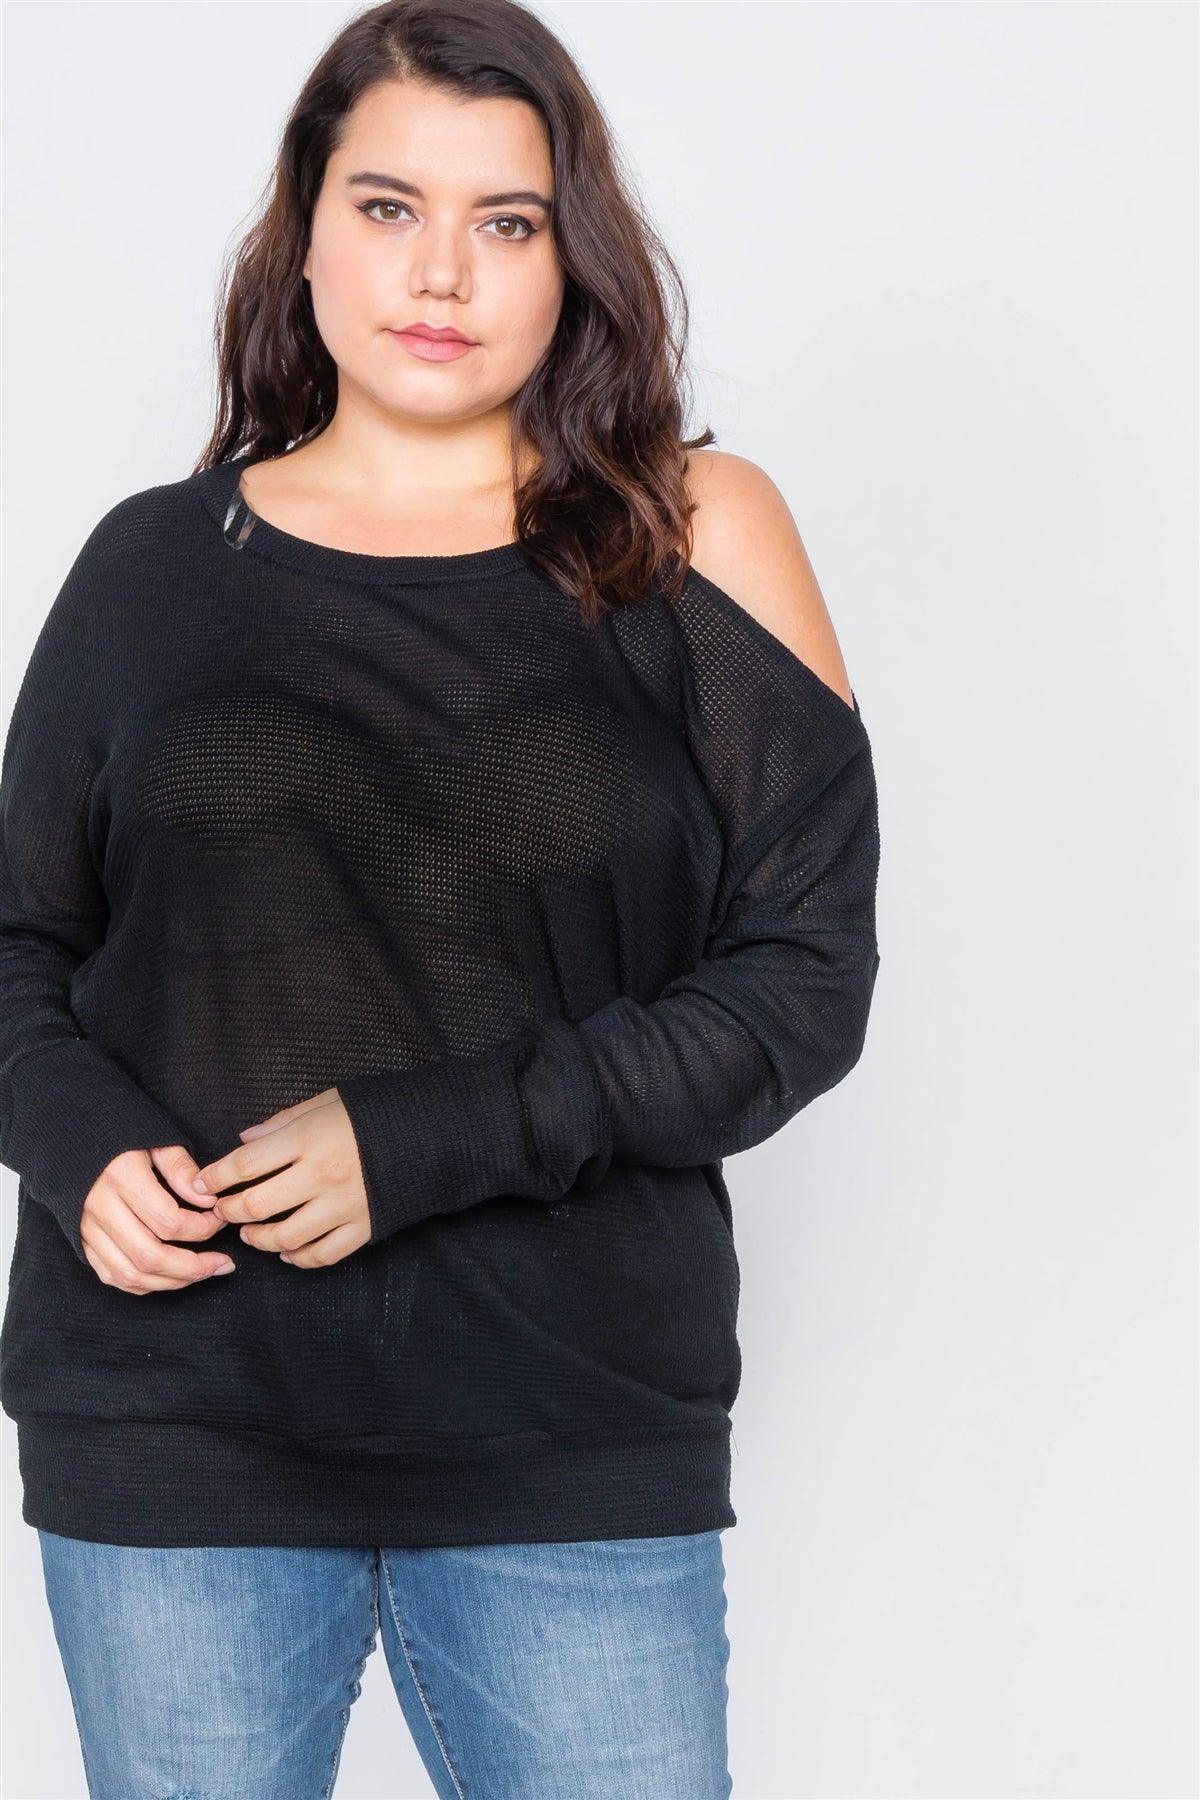 Plus Size Sheer Black Cotton Could Shoulder Sweater